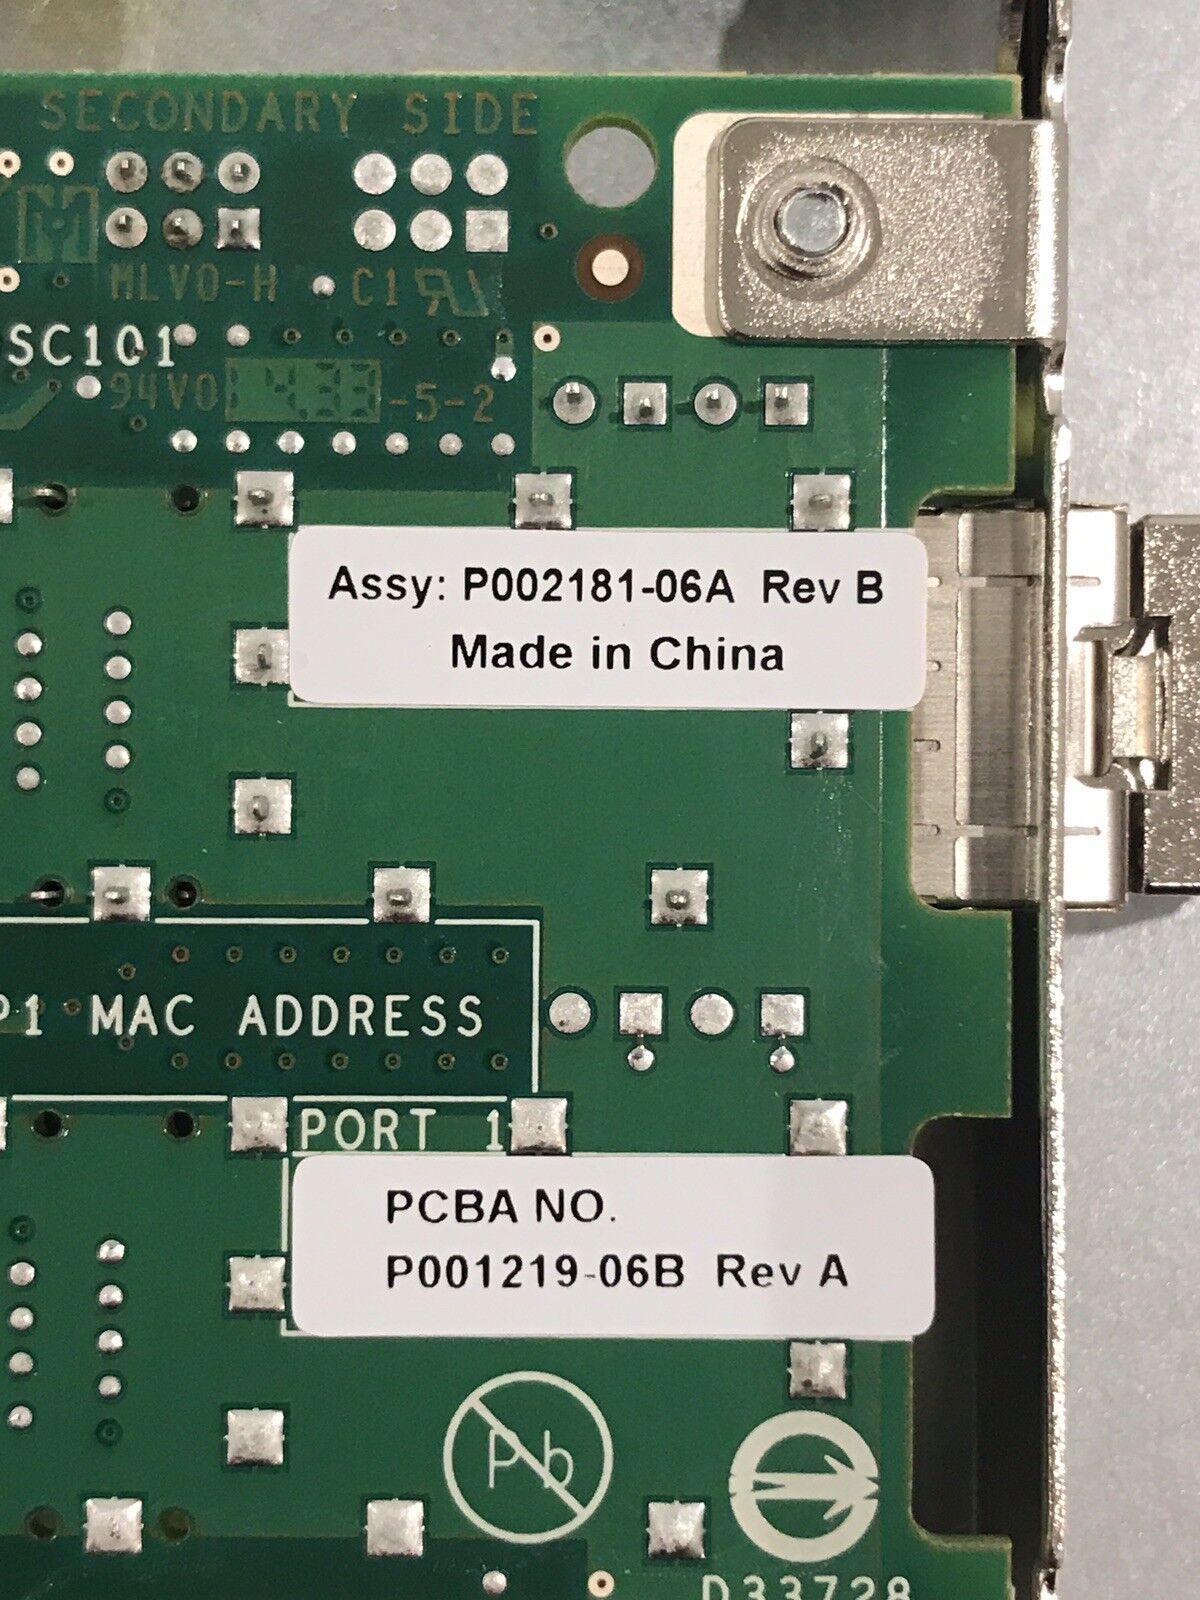 HP AJ762B 8Gb PCI-e FC HBA Emulex StorageWorks HPE 1x SFP Transceiver FH 81E.